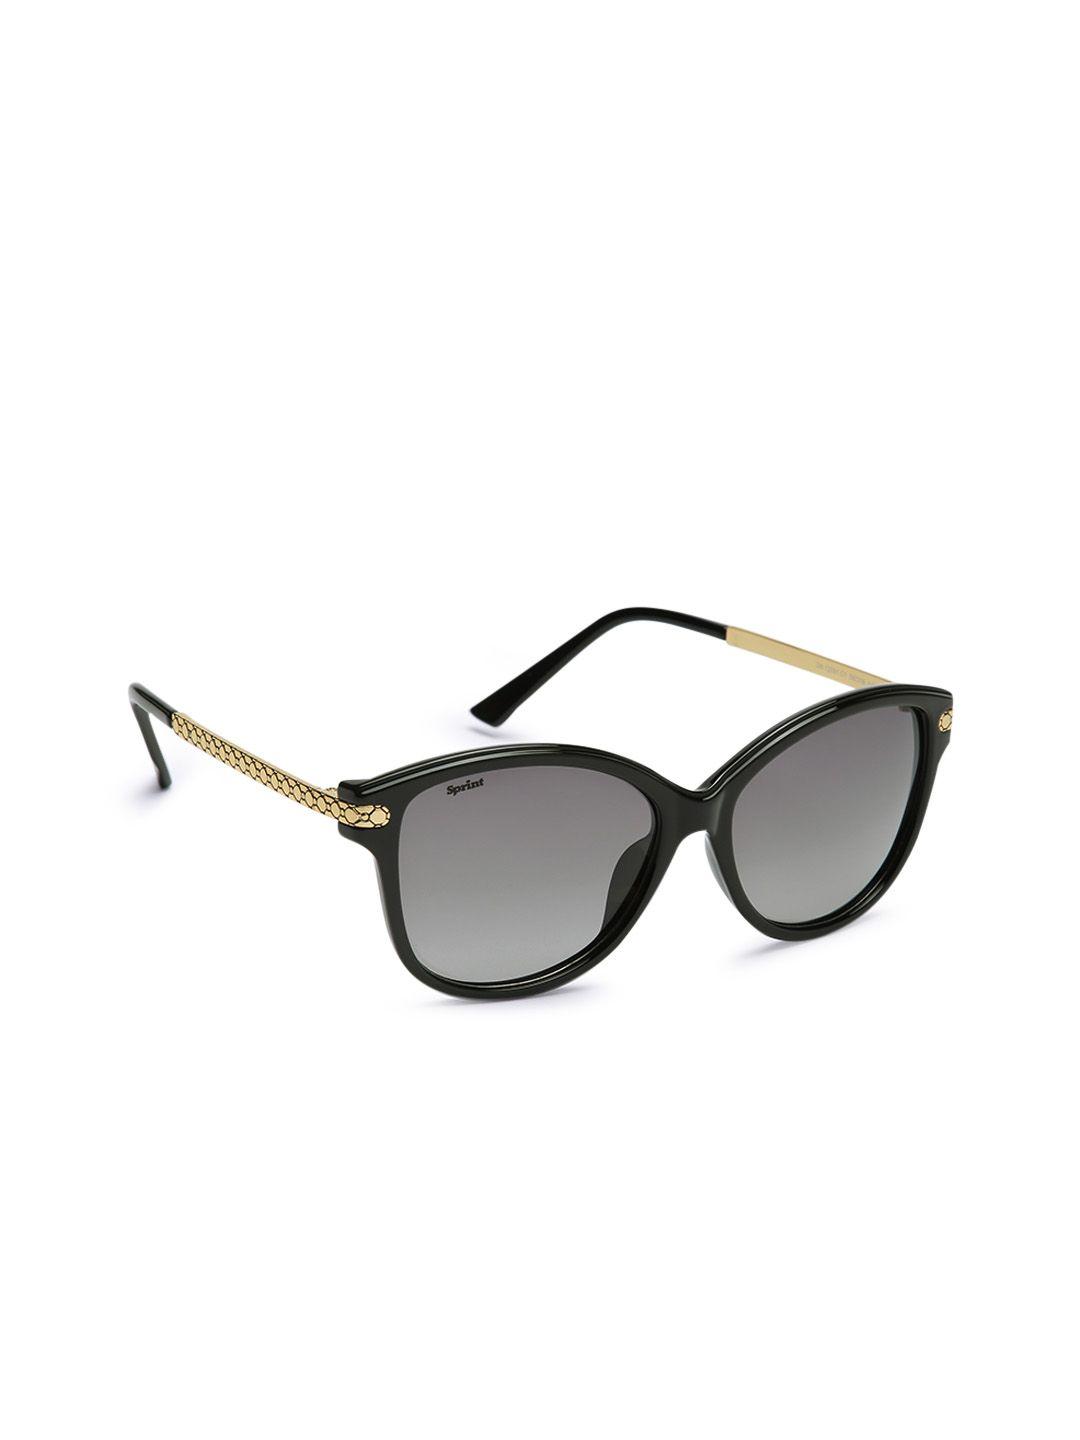 sprint women grey lens & black rectangle sunglasses with polarised lens 12091 c1 s